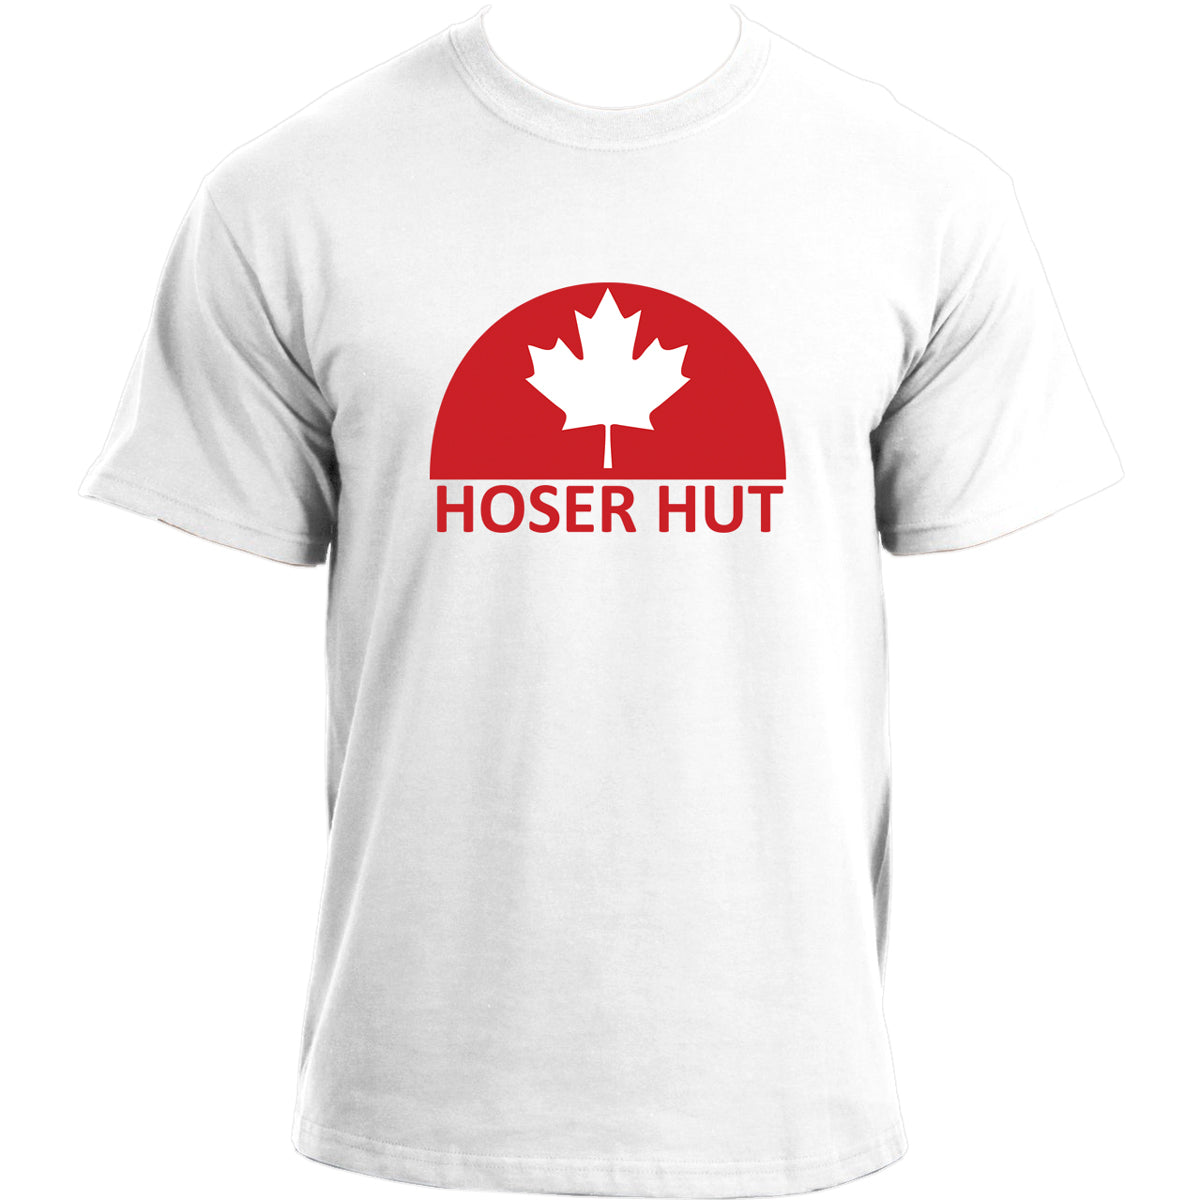 himym Hoser Hut Canadian Bar TV Series Inspired Funny T-Shirt